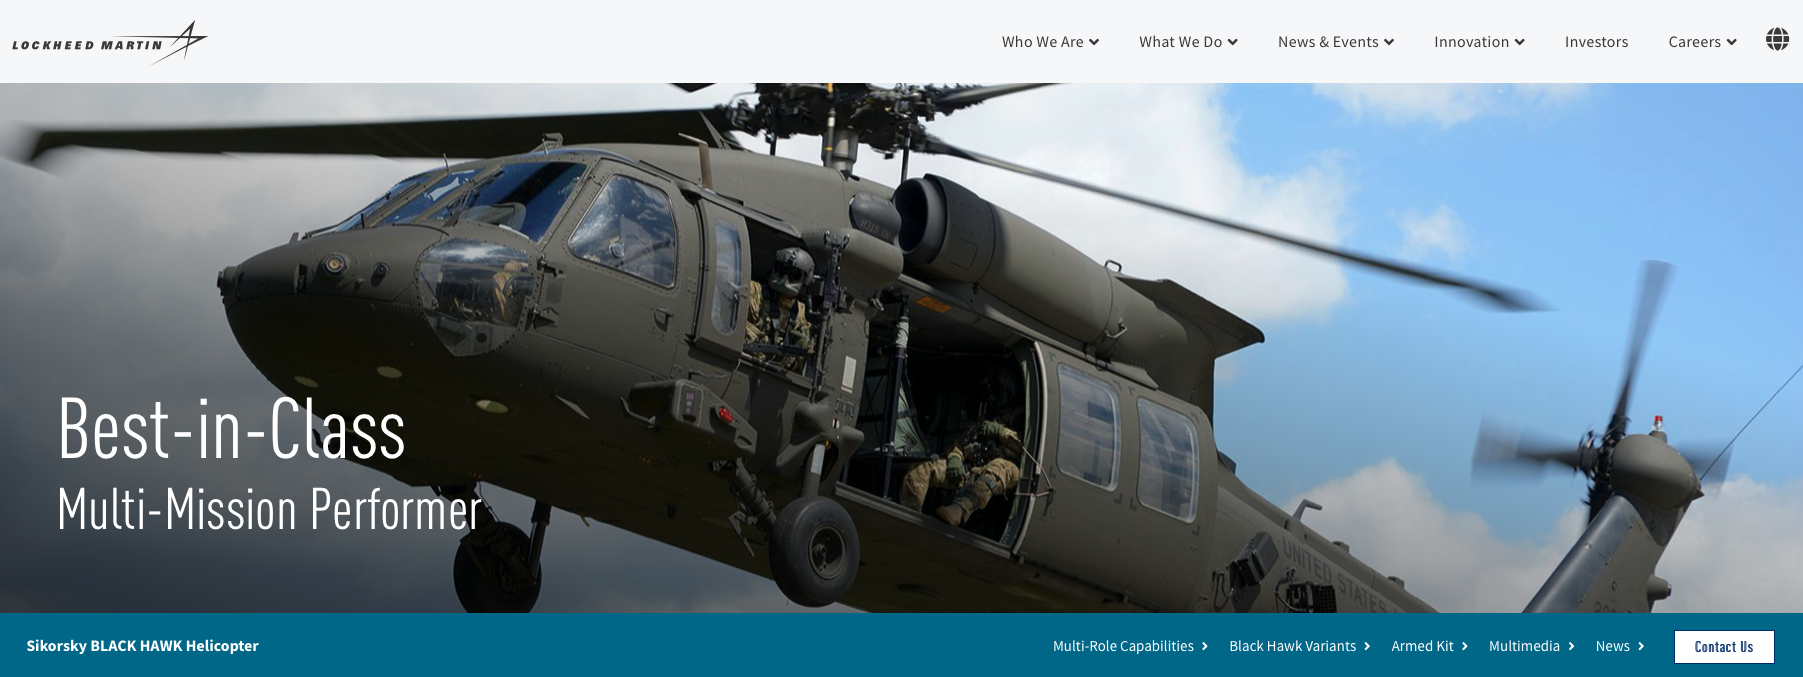 Black Hawk. 2019 rok. Zdjęcie Lockheed Martin